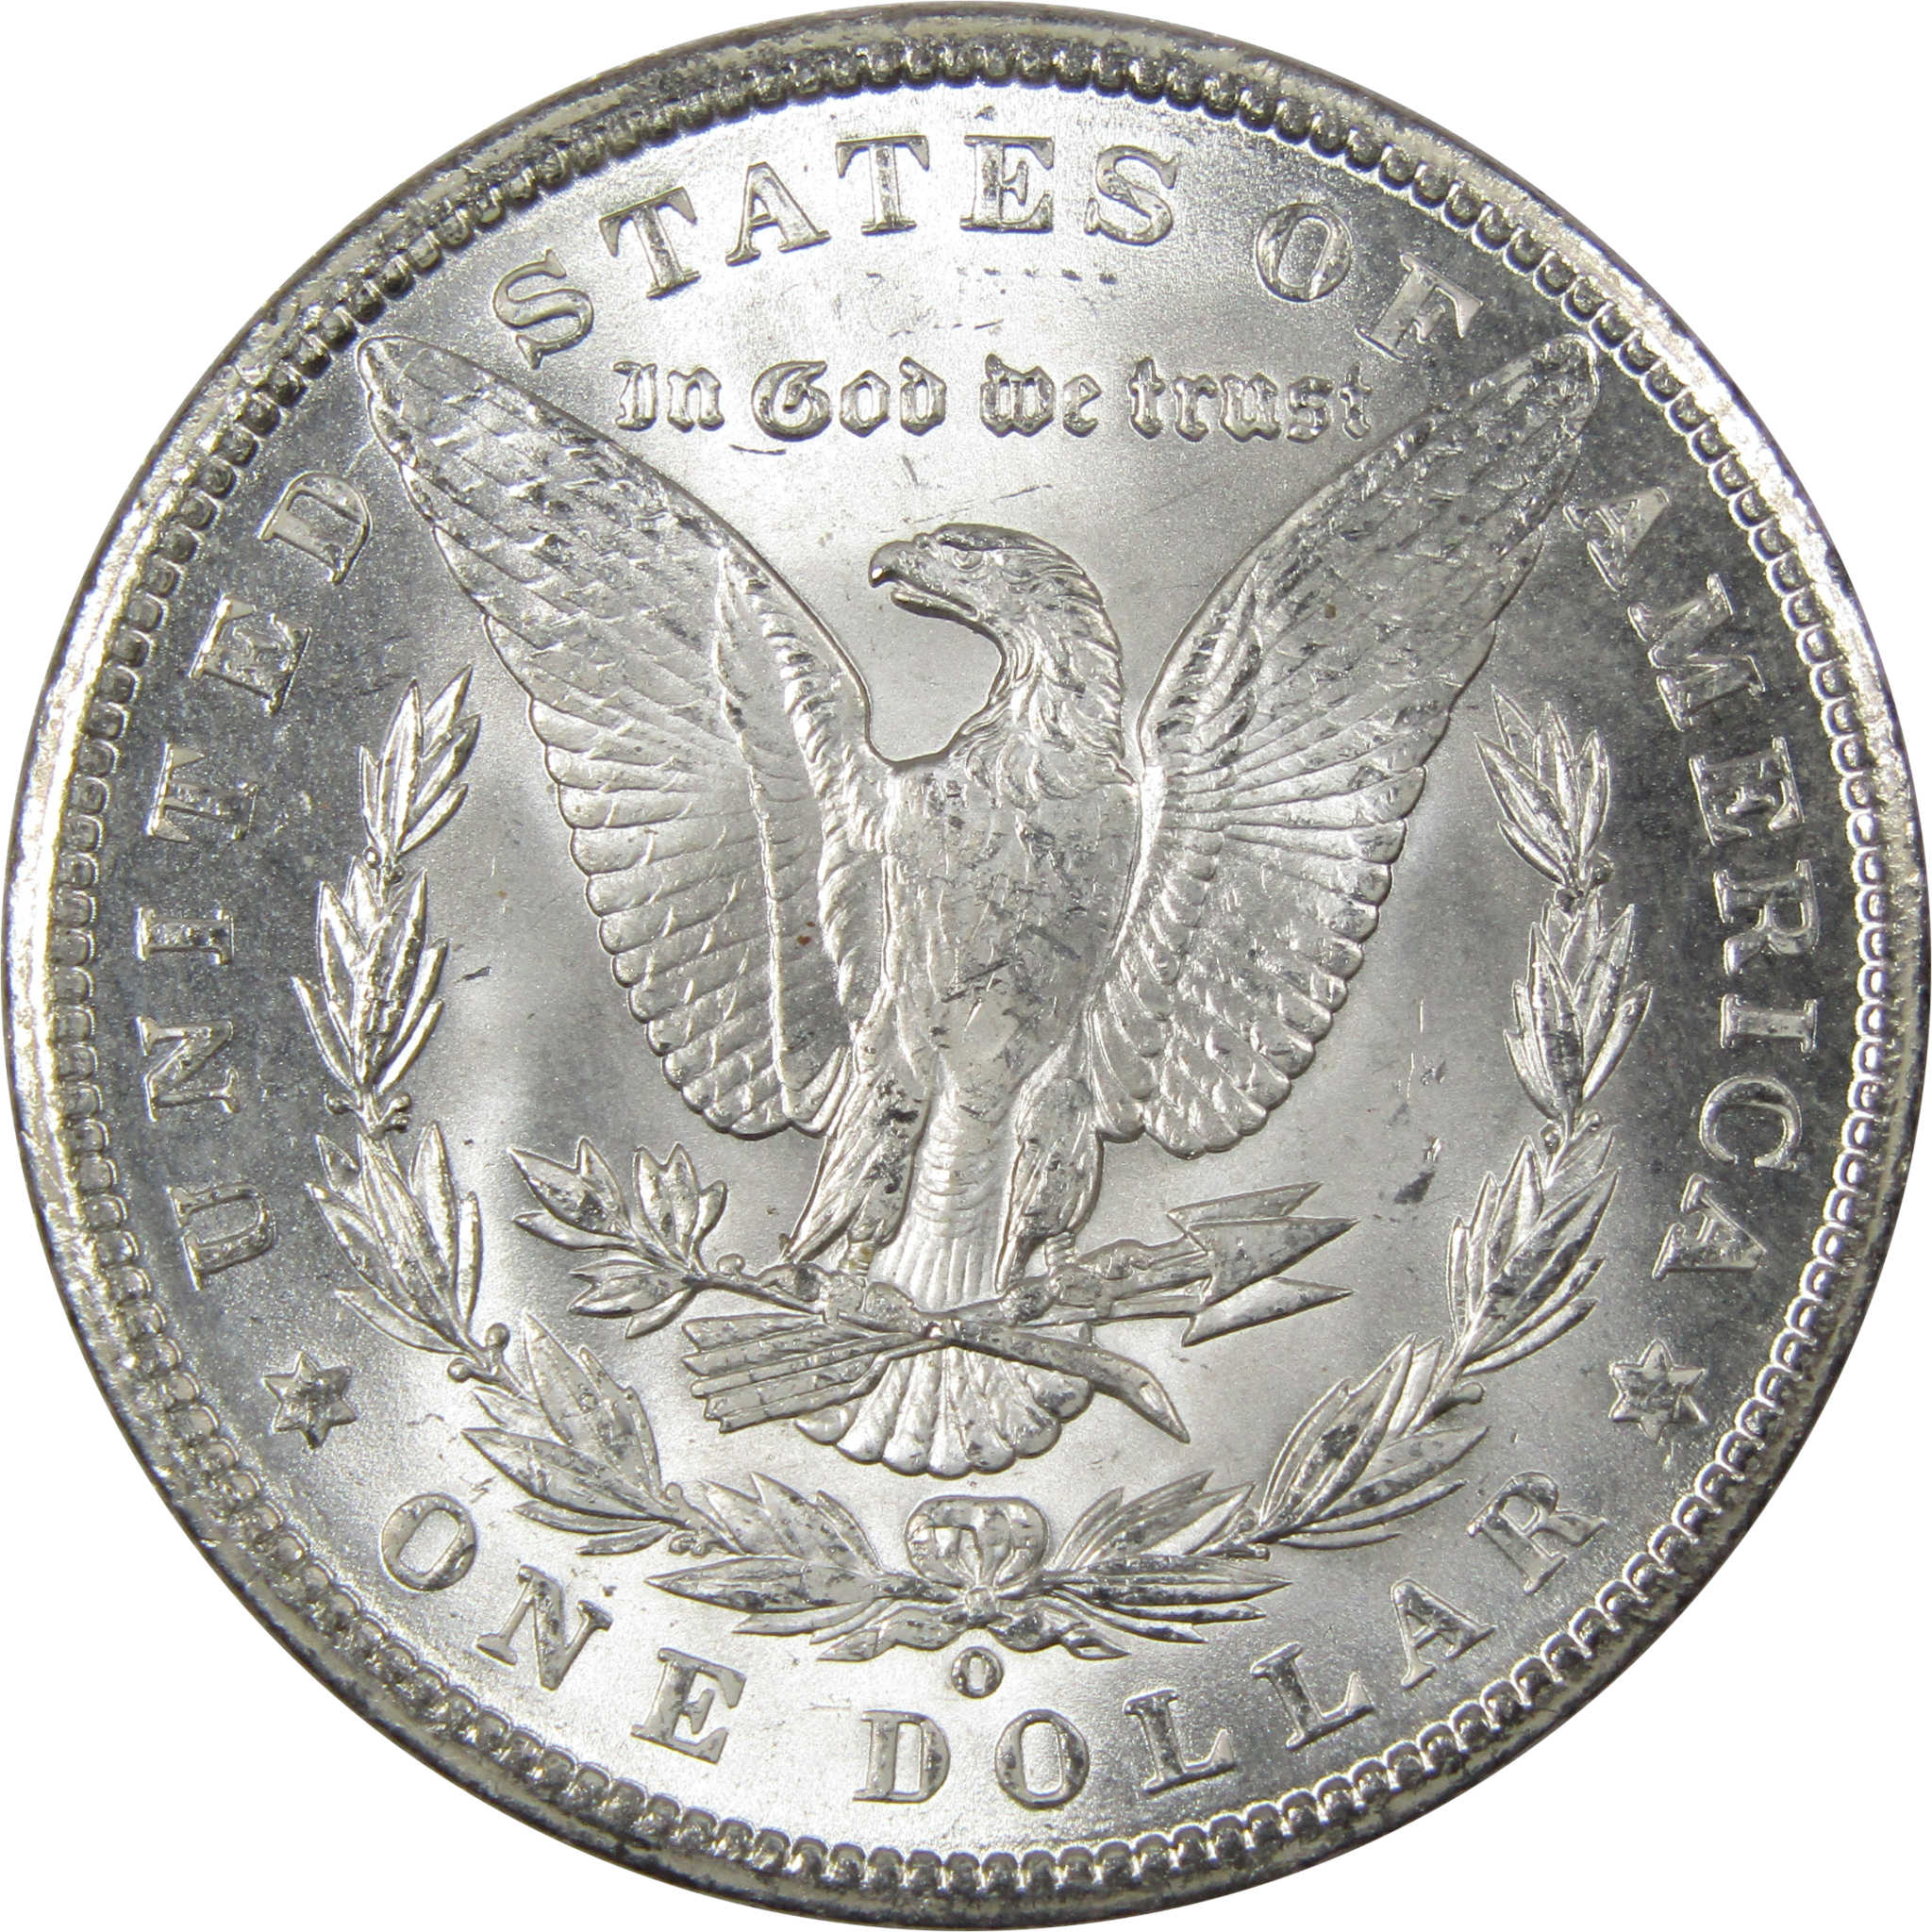 1900 O Morgan Dollar BU Uncirculated Mint State 90% Silver SKU:IPC9758 - Morgan coin - Morgan silver dollar - Morgan silver dollar for sale - Profile Coins &amp; Collectibles